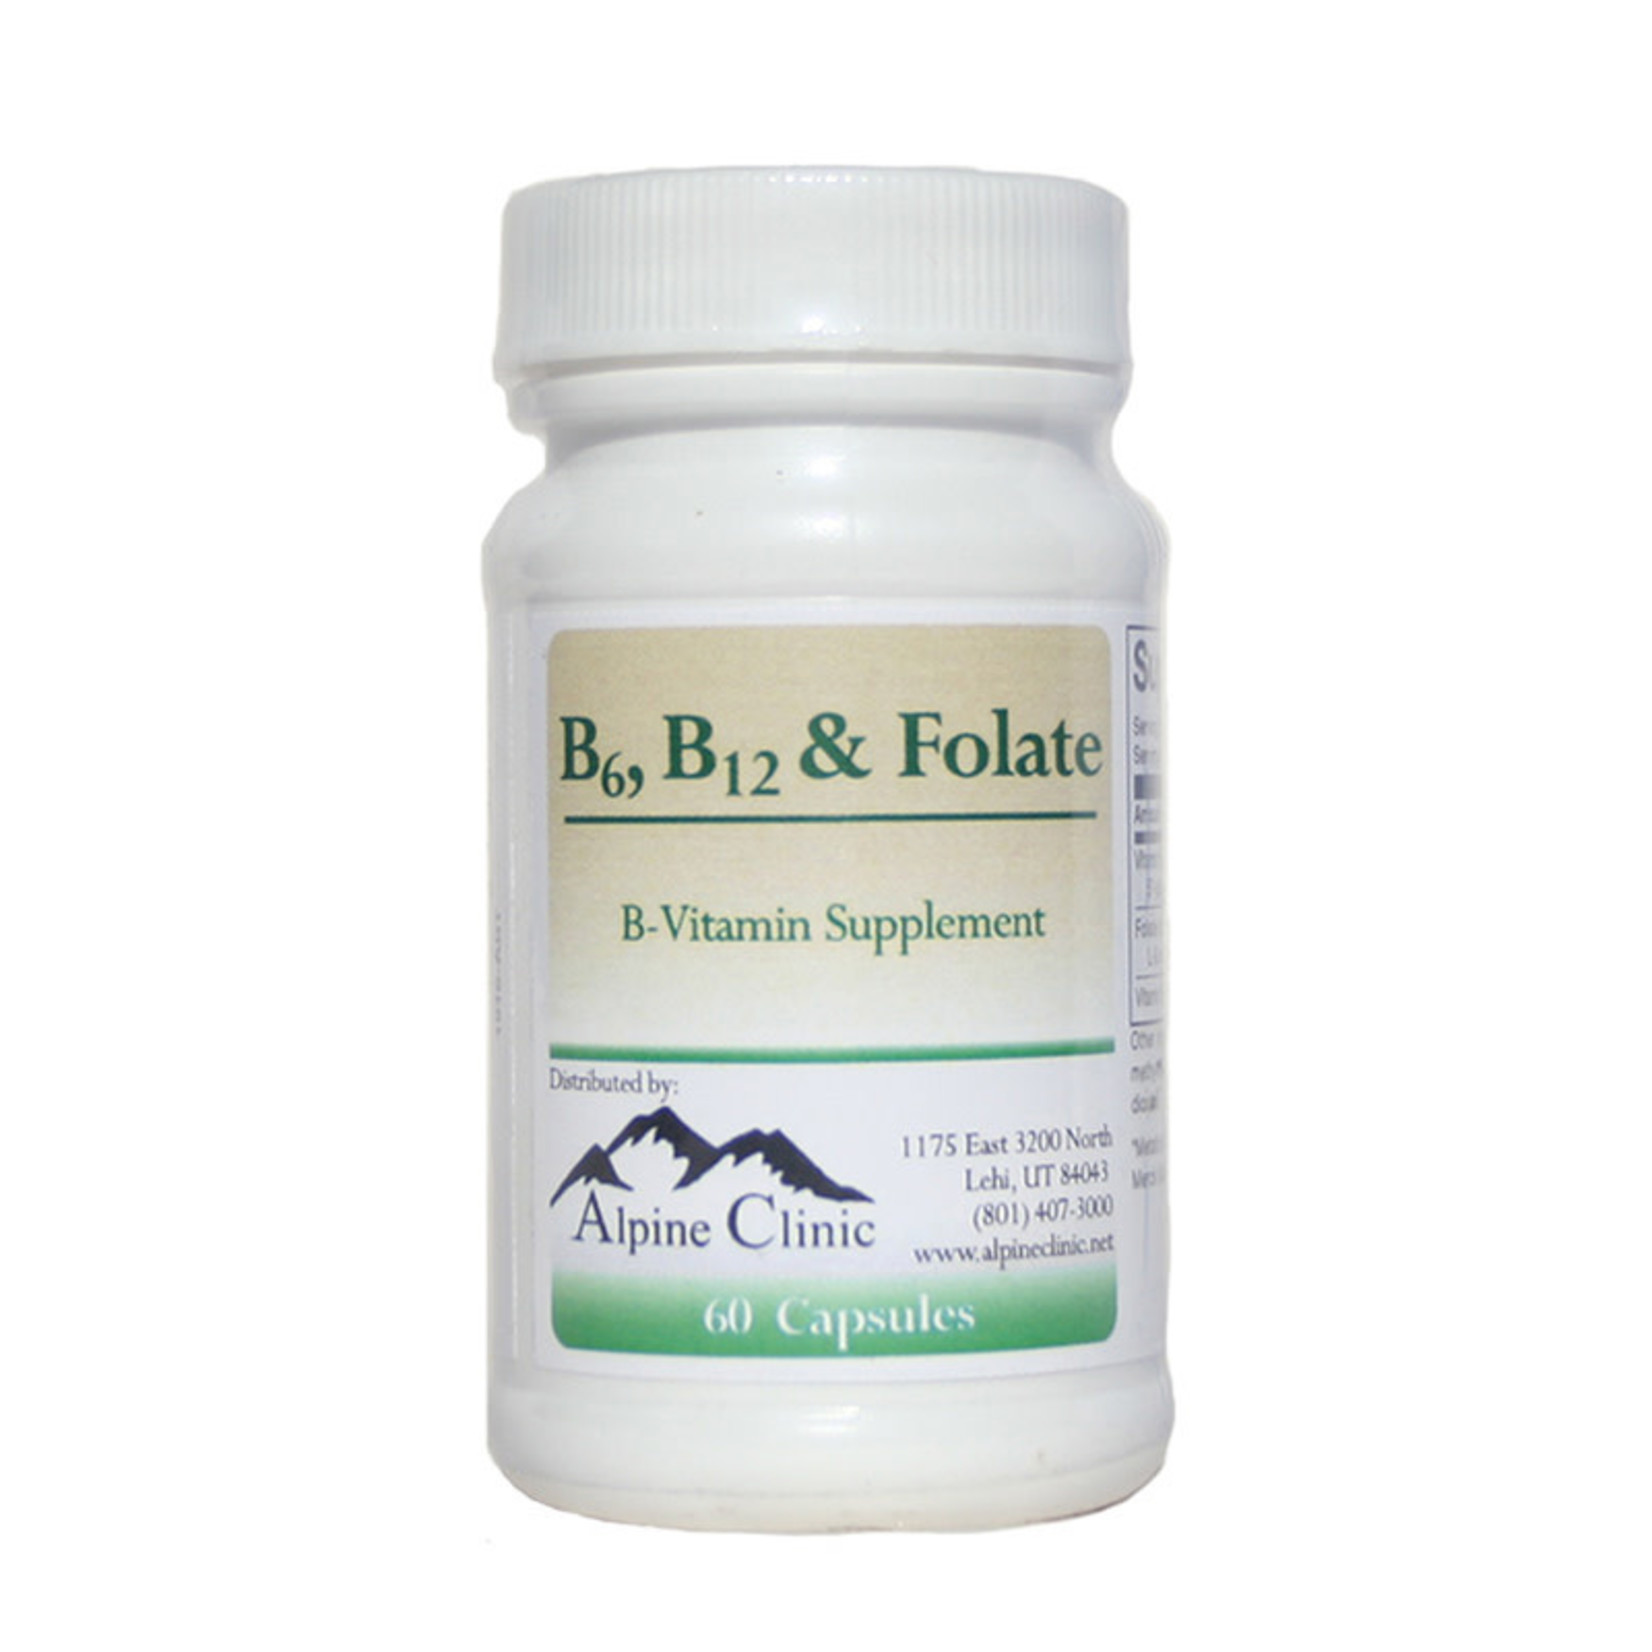 Alpine Clinic PL B6, B12 and Folate